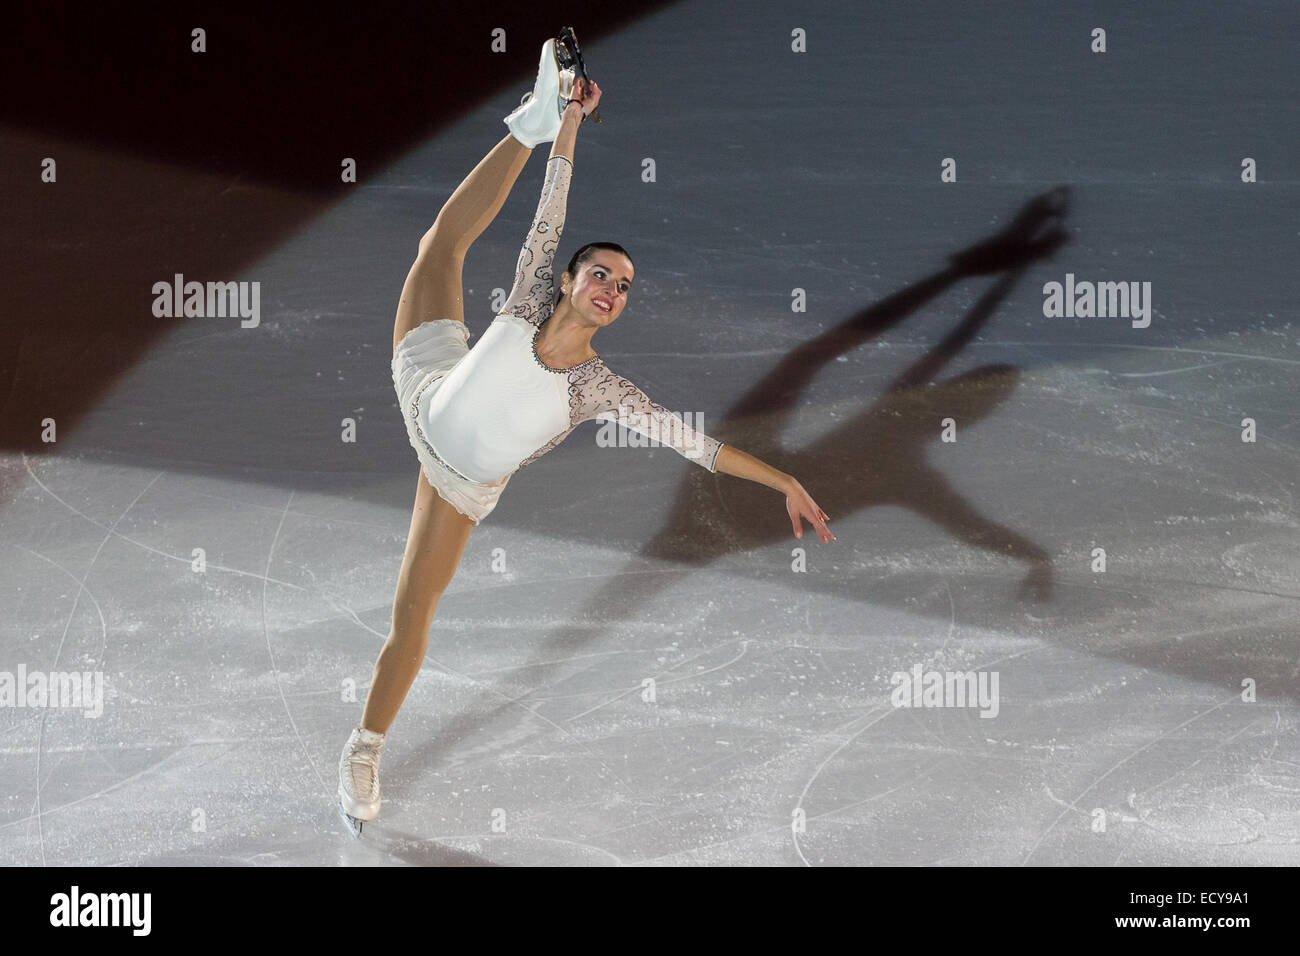 Carolina kostner skate hi-res stock photography and images - Alamy